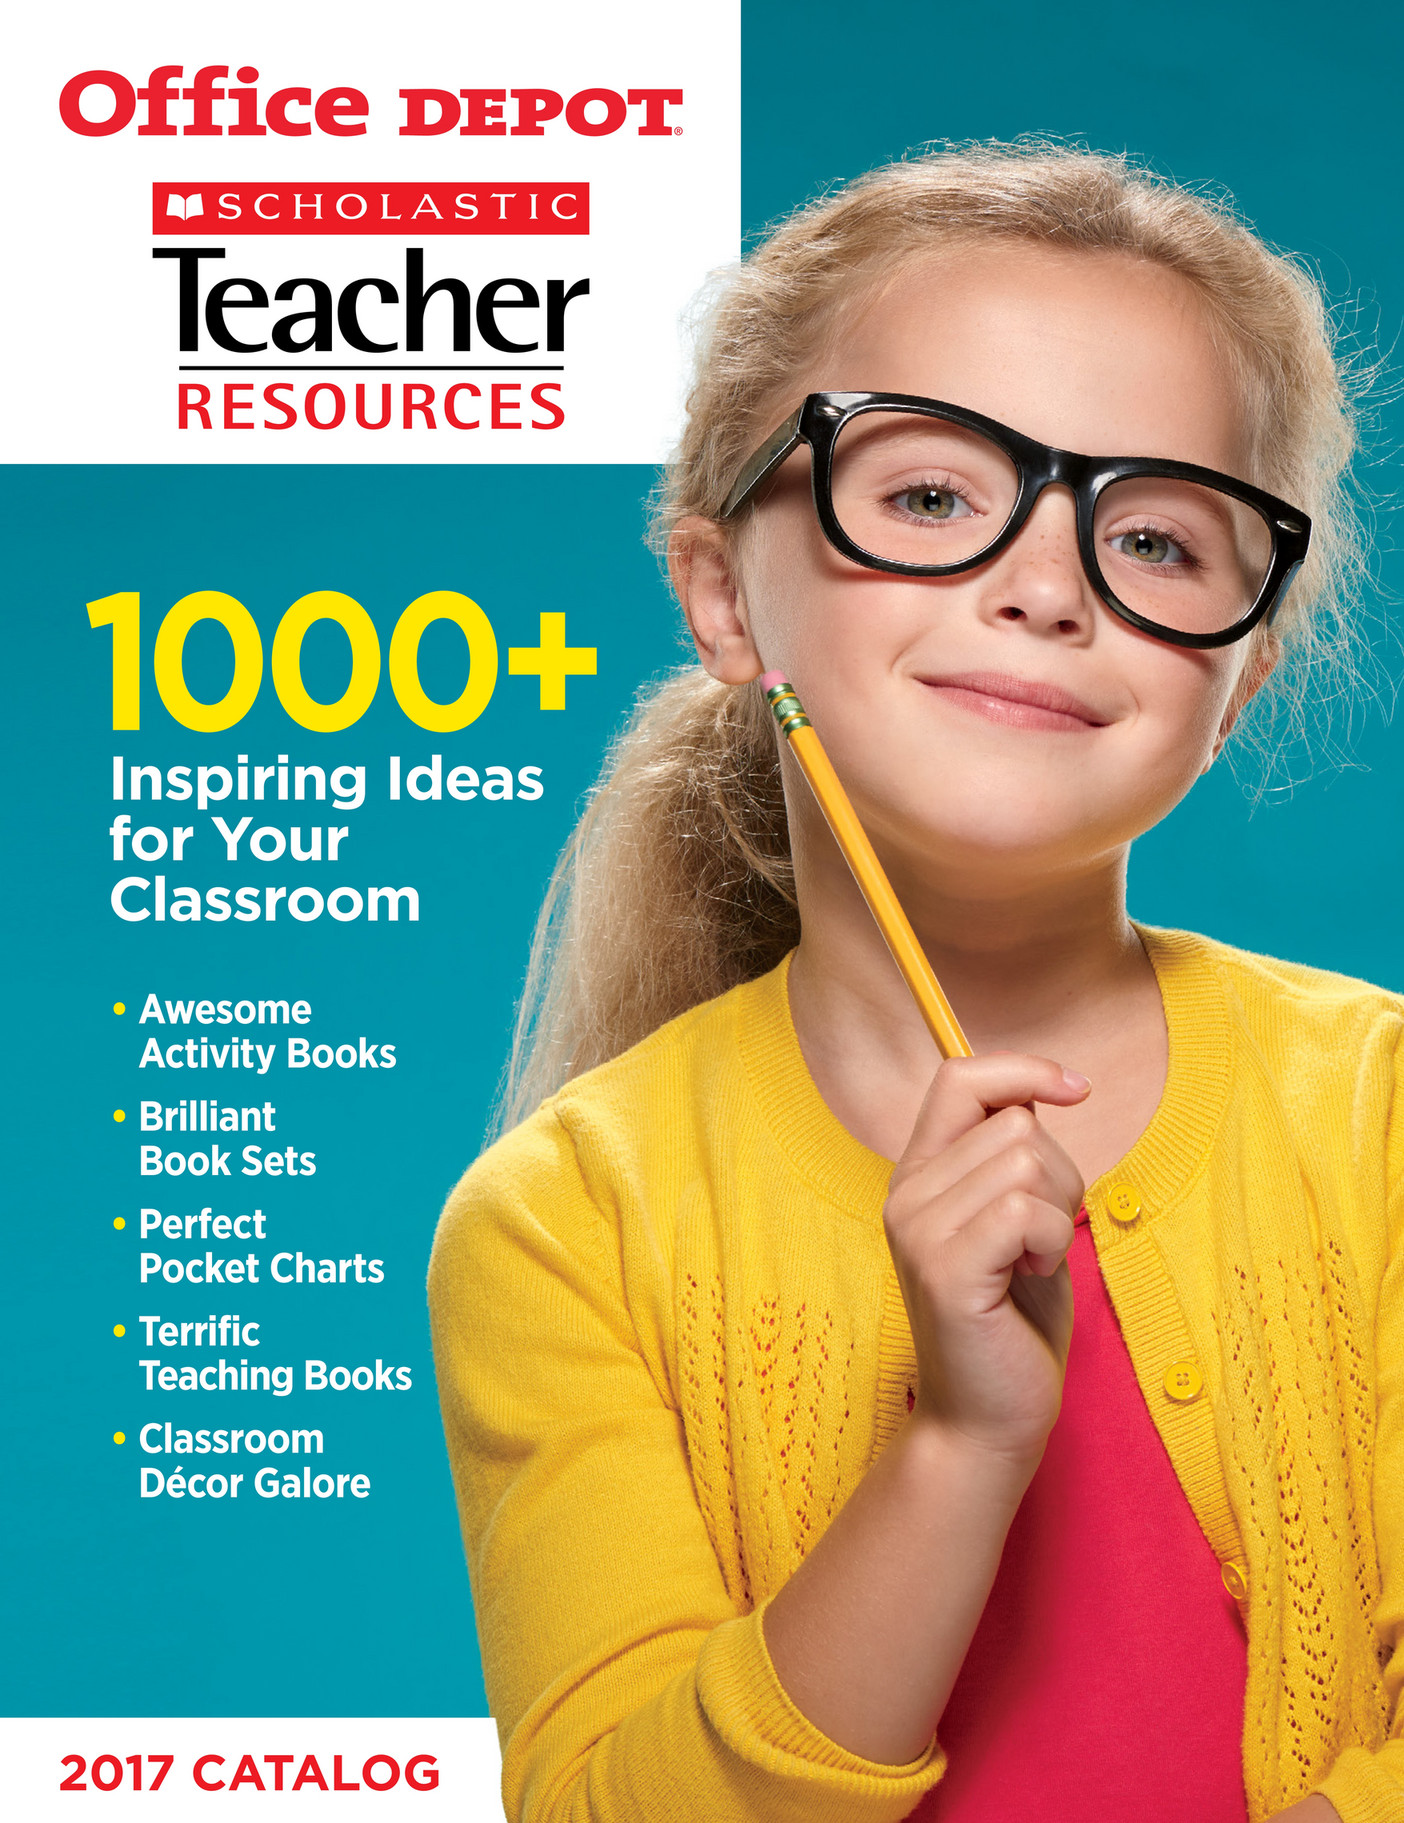 scholastic-teacher-s-resources-page-1